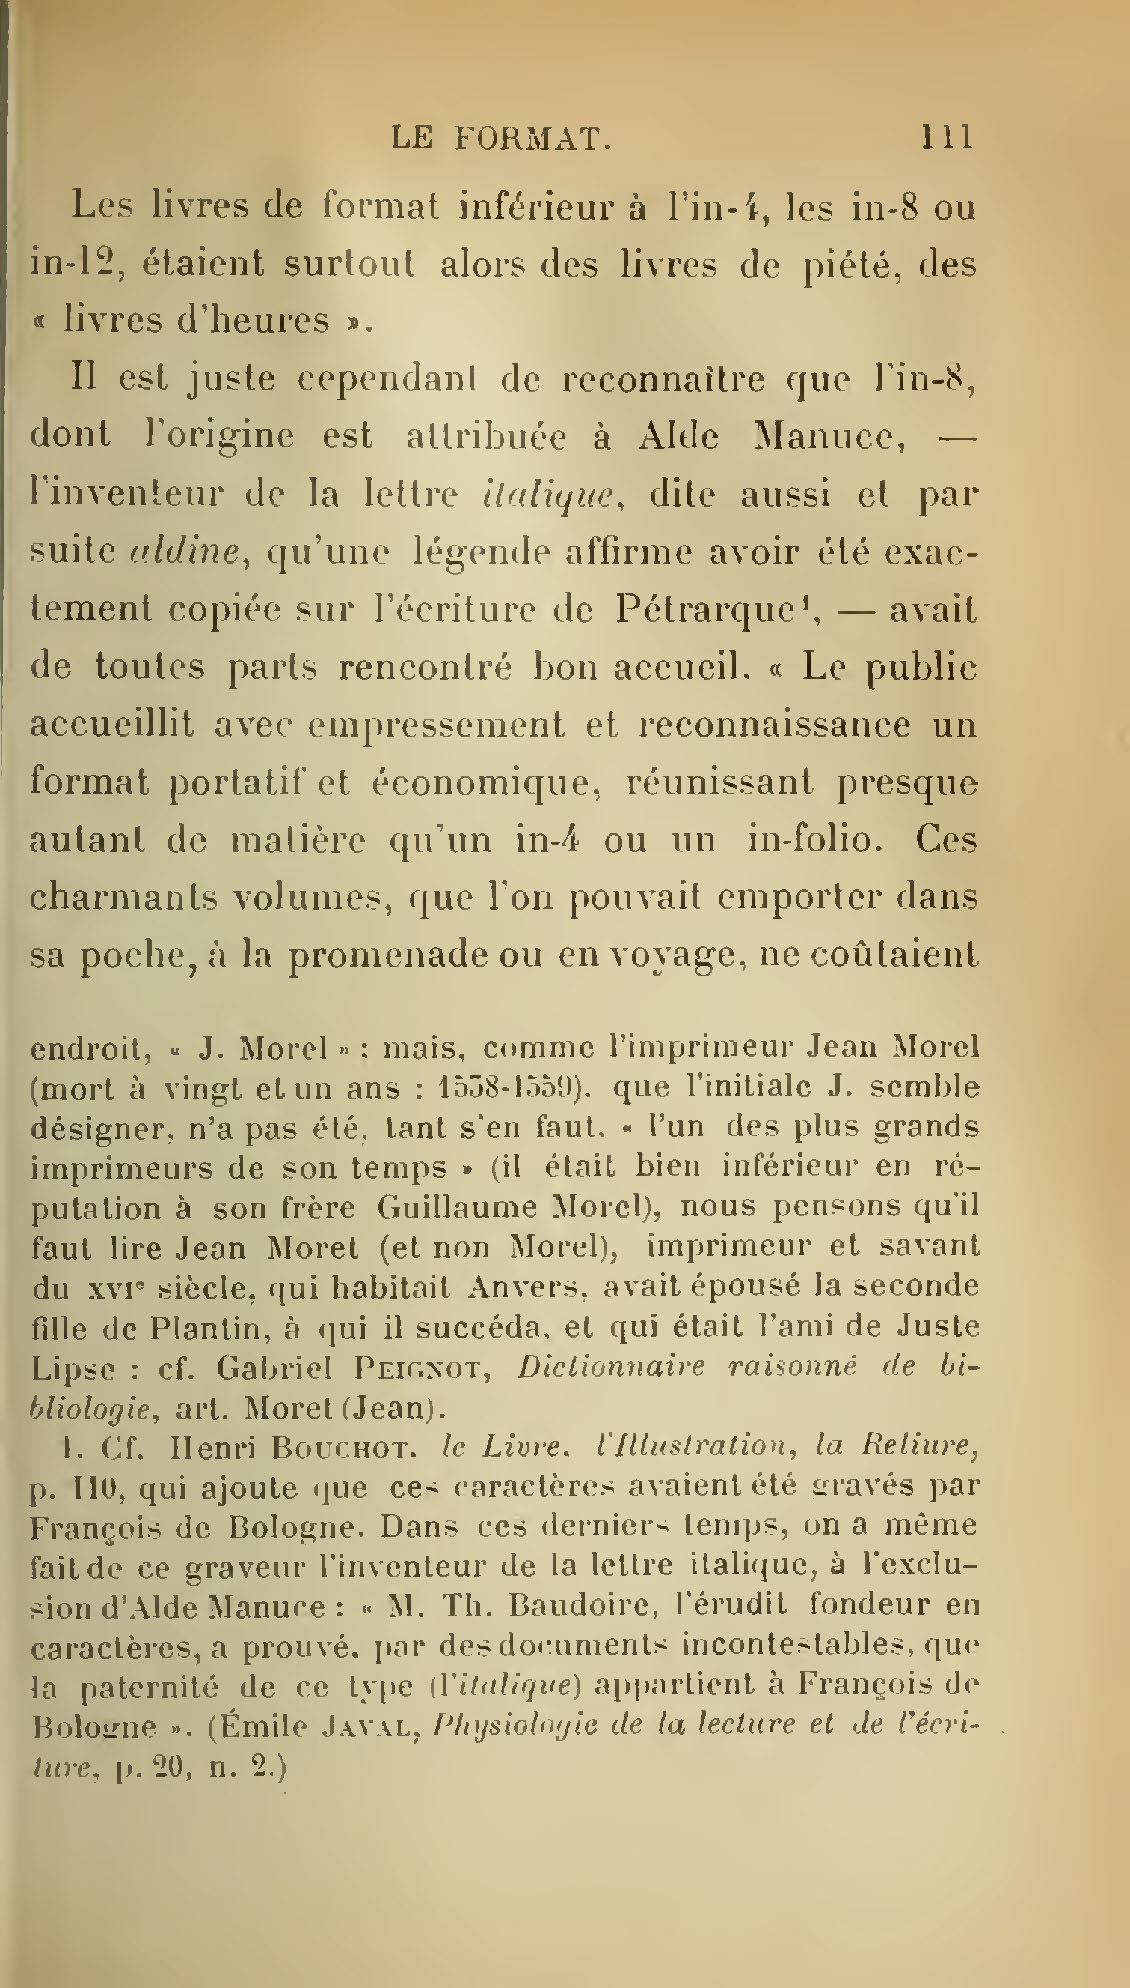 Albert Cim, Le Livre, t. III, p. 111.